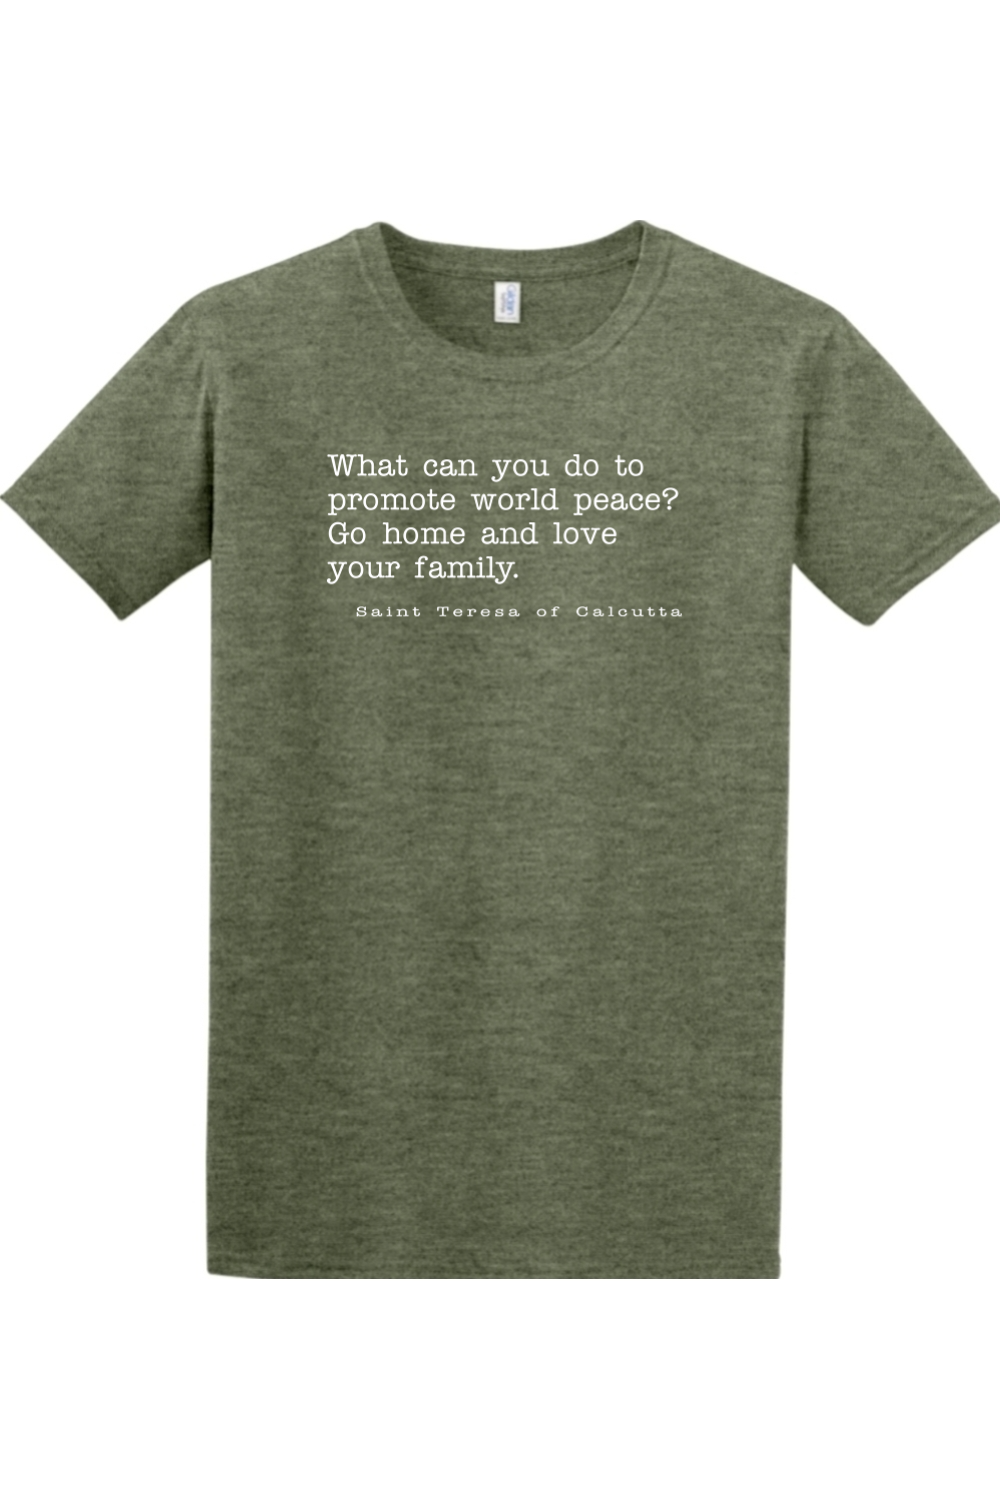 Love Your Family - St. Teresa of Calcutta - T-shirt